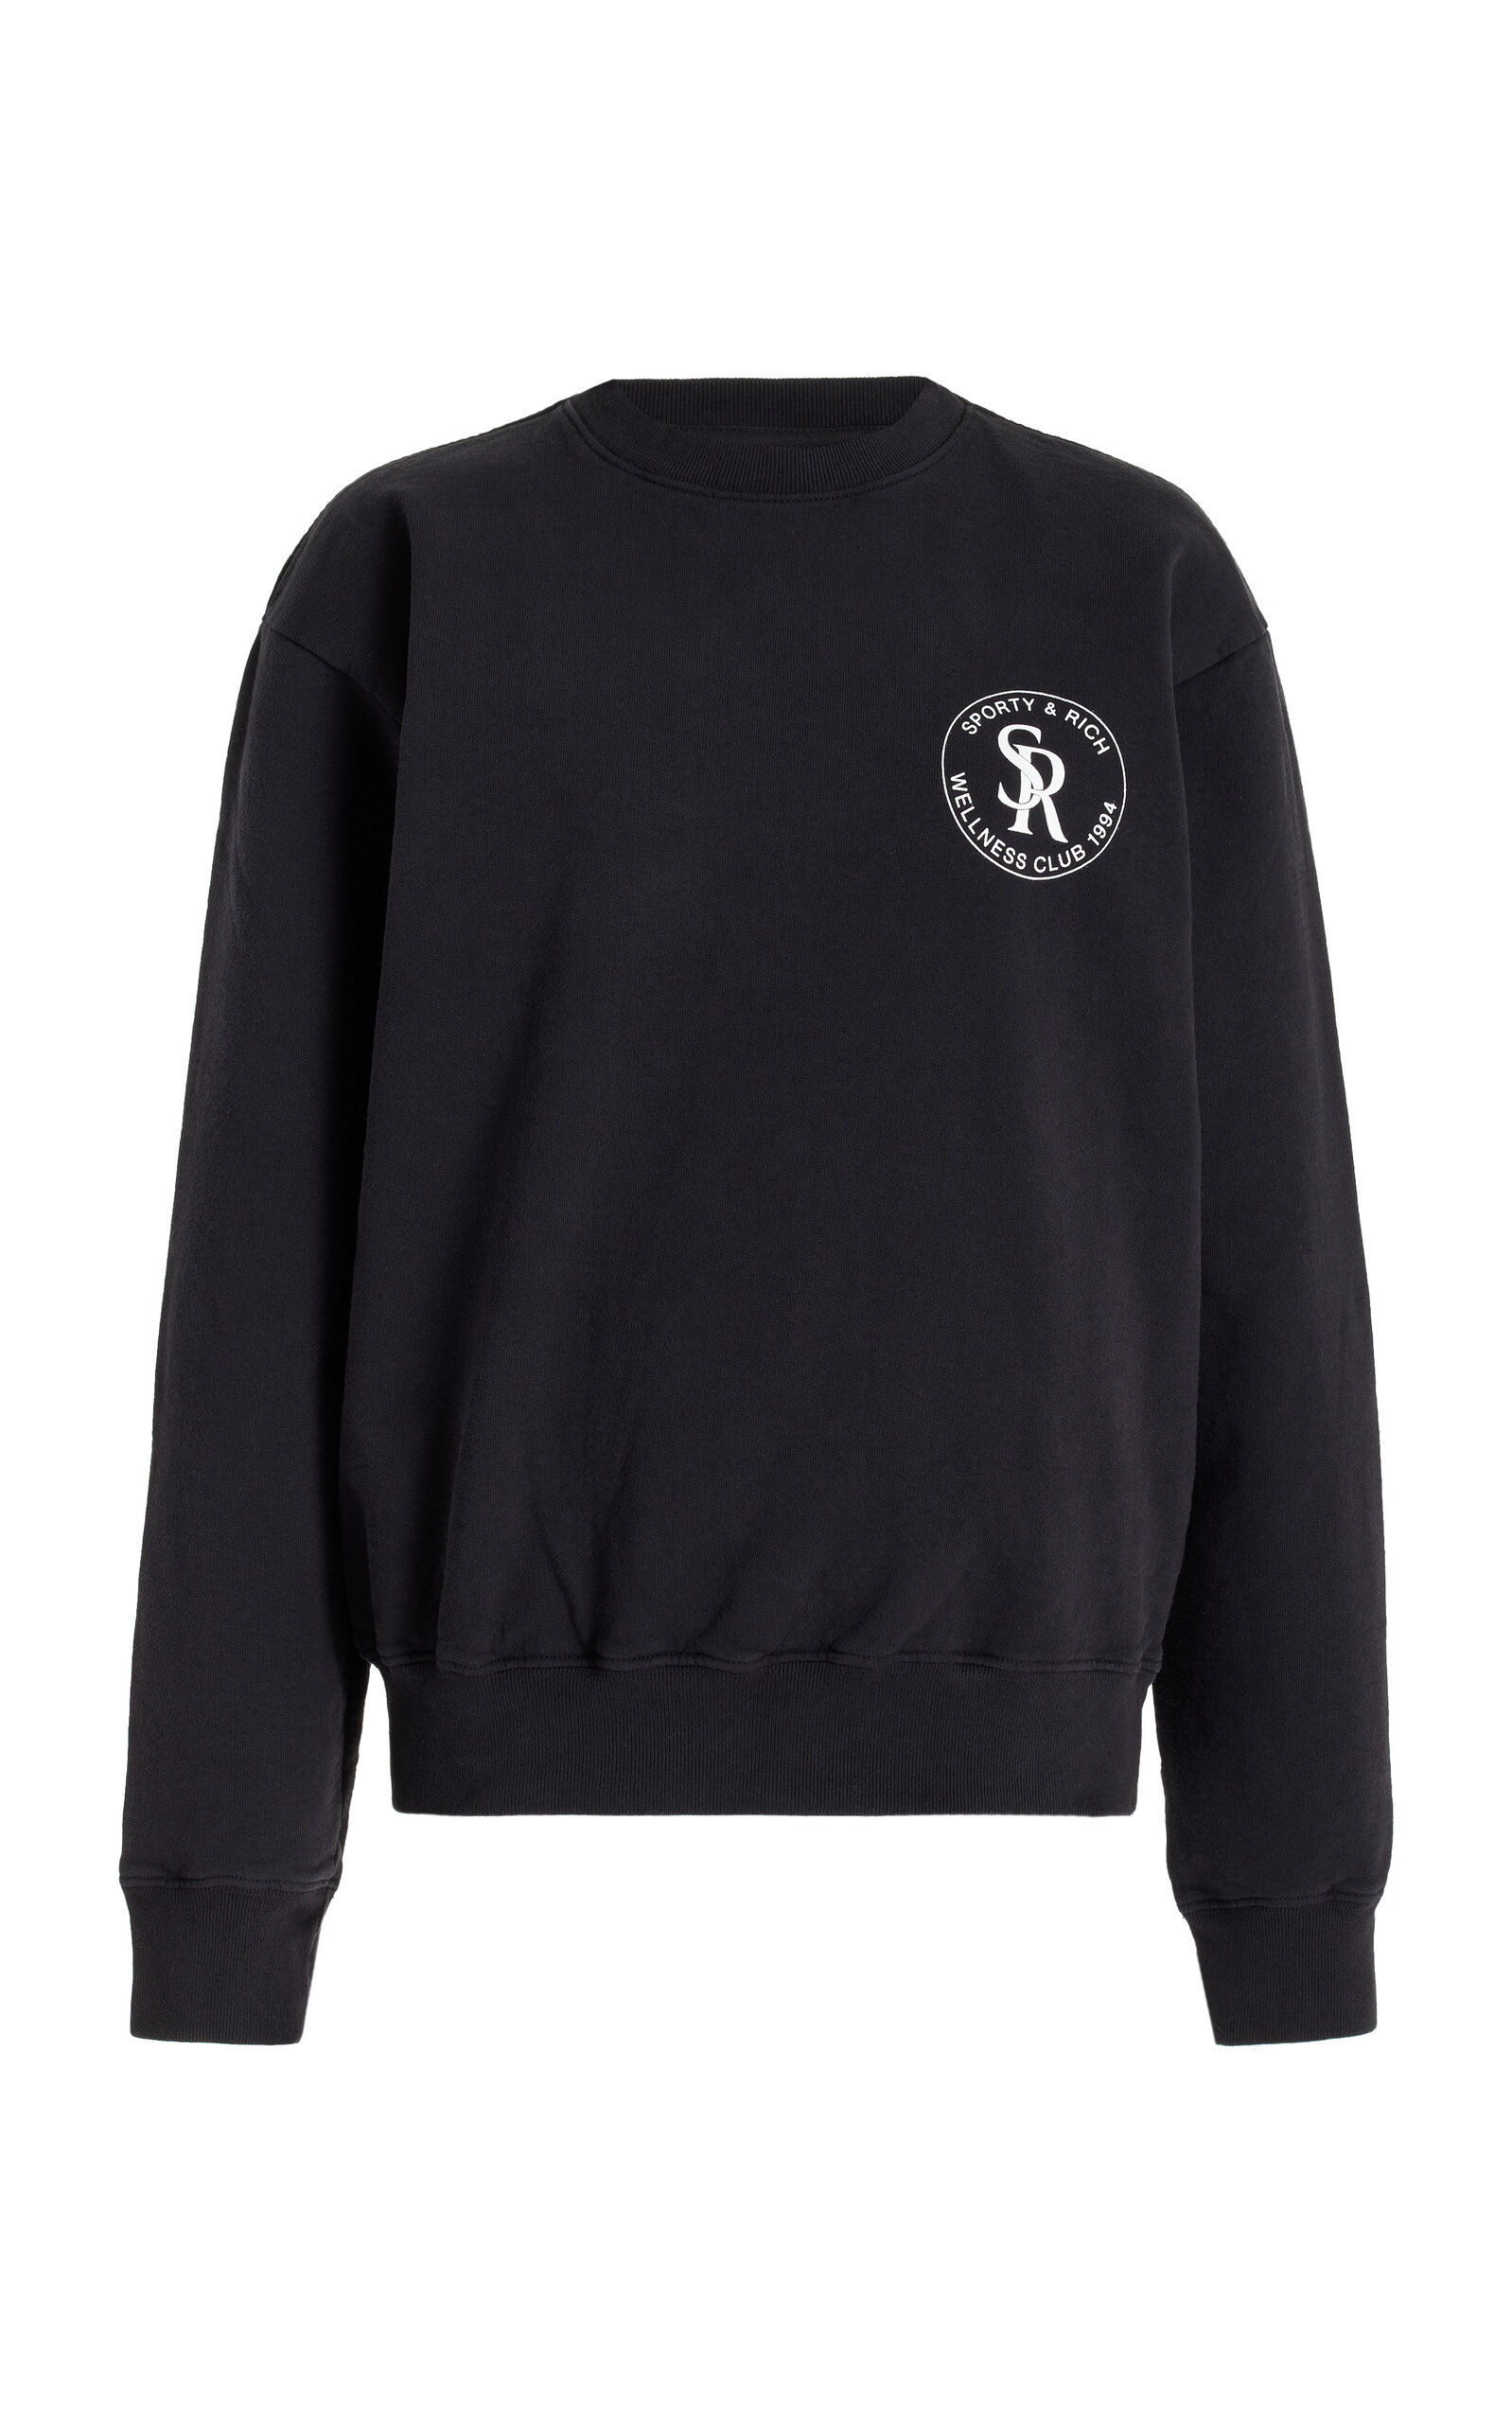 Sporty & Rich - Women's S&R Cotton Sweatshirt - Black - XS - Moda Operandi